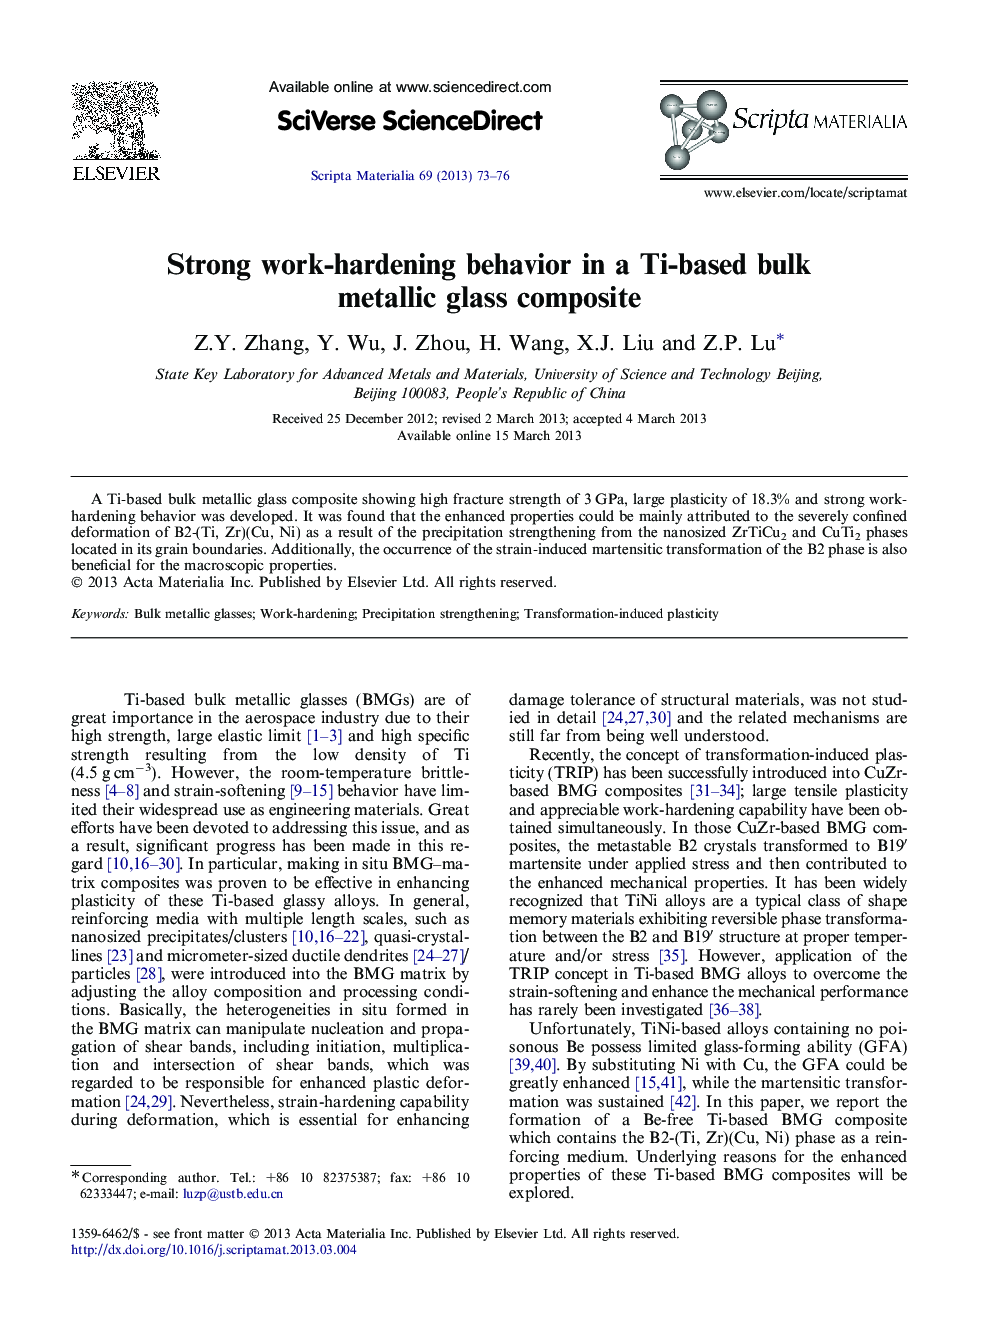 Strong work-hardening behavior in a Ti-based bulk metallic glass composite